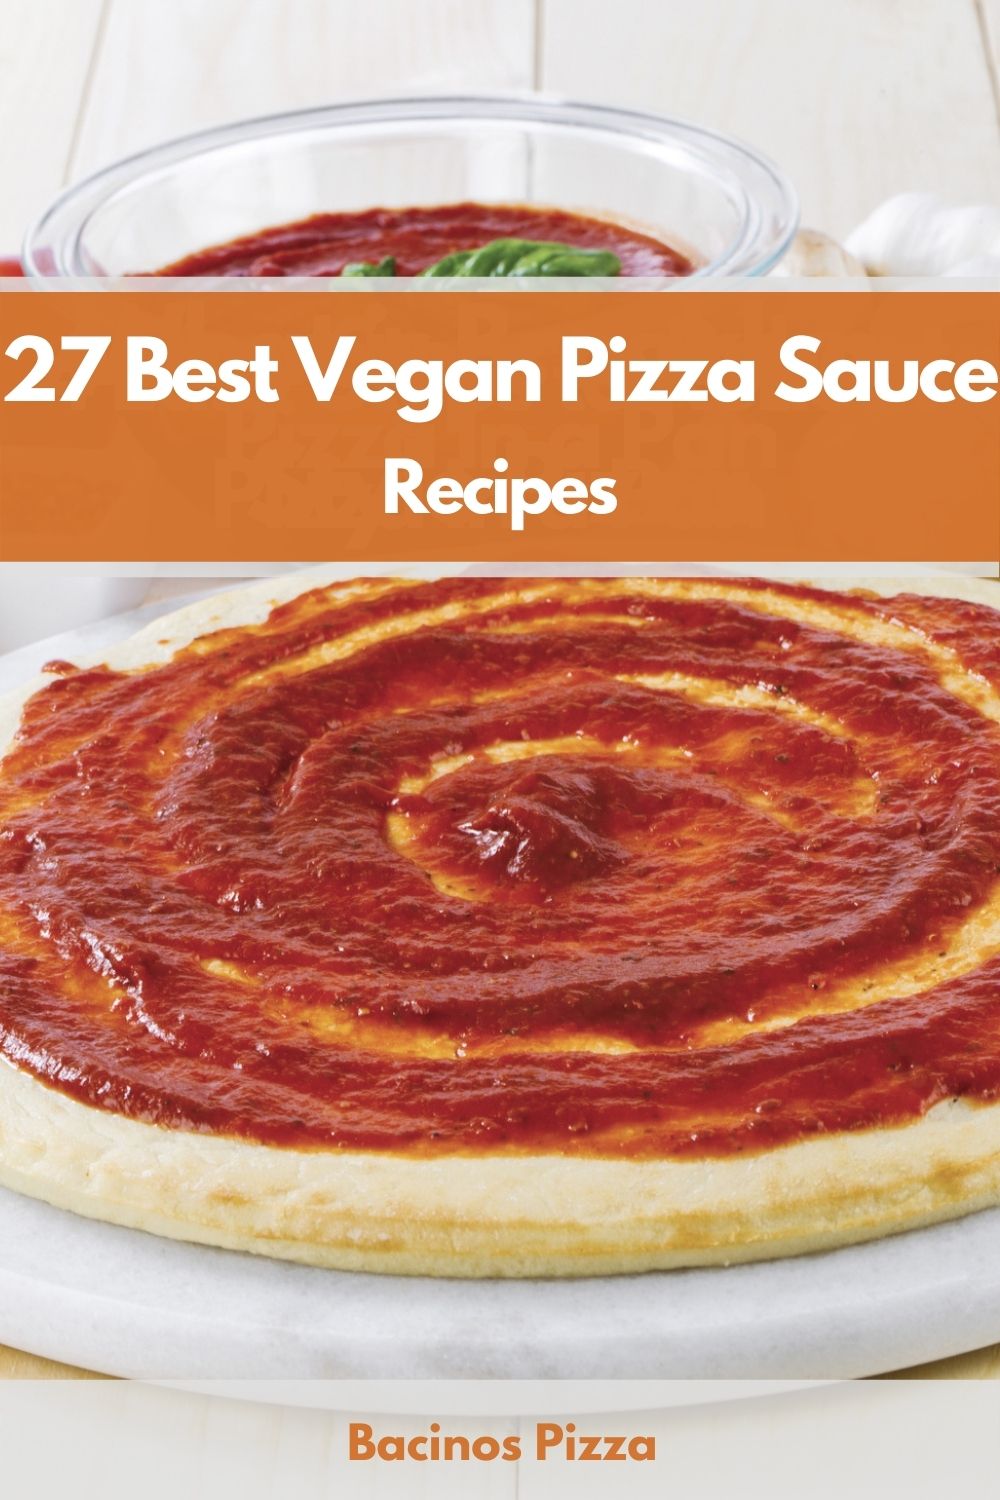 27 Best Vegan Pizza Sauce Recipes pin